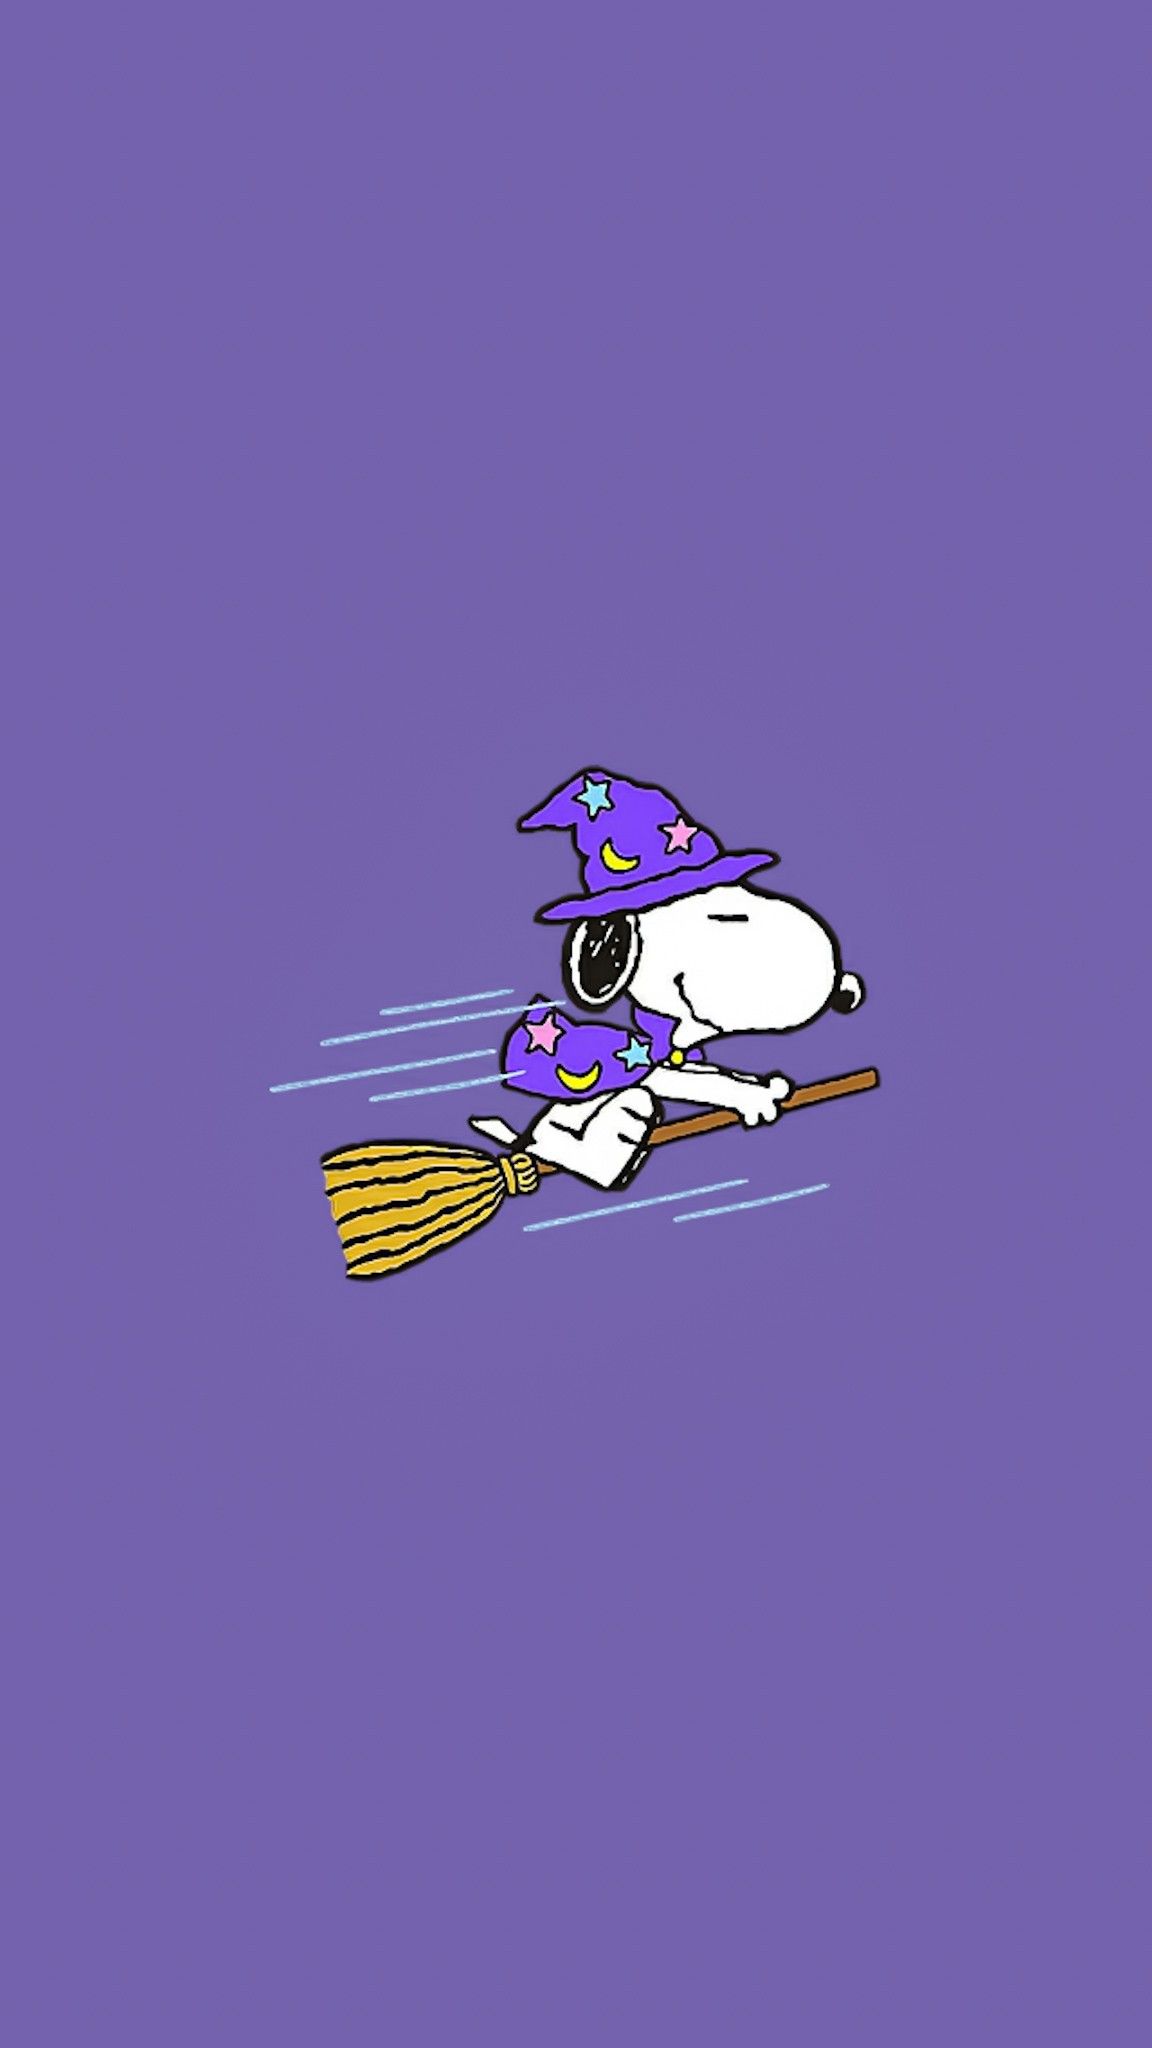 A cartoon dog is flying on his broom - Snoopy